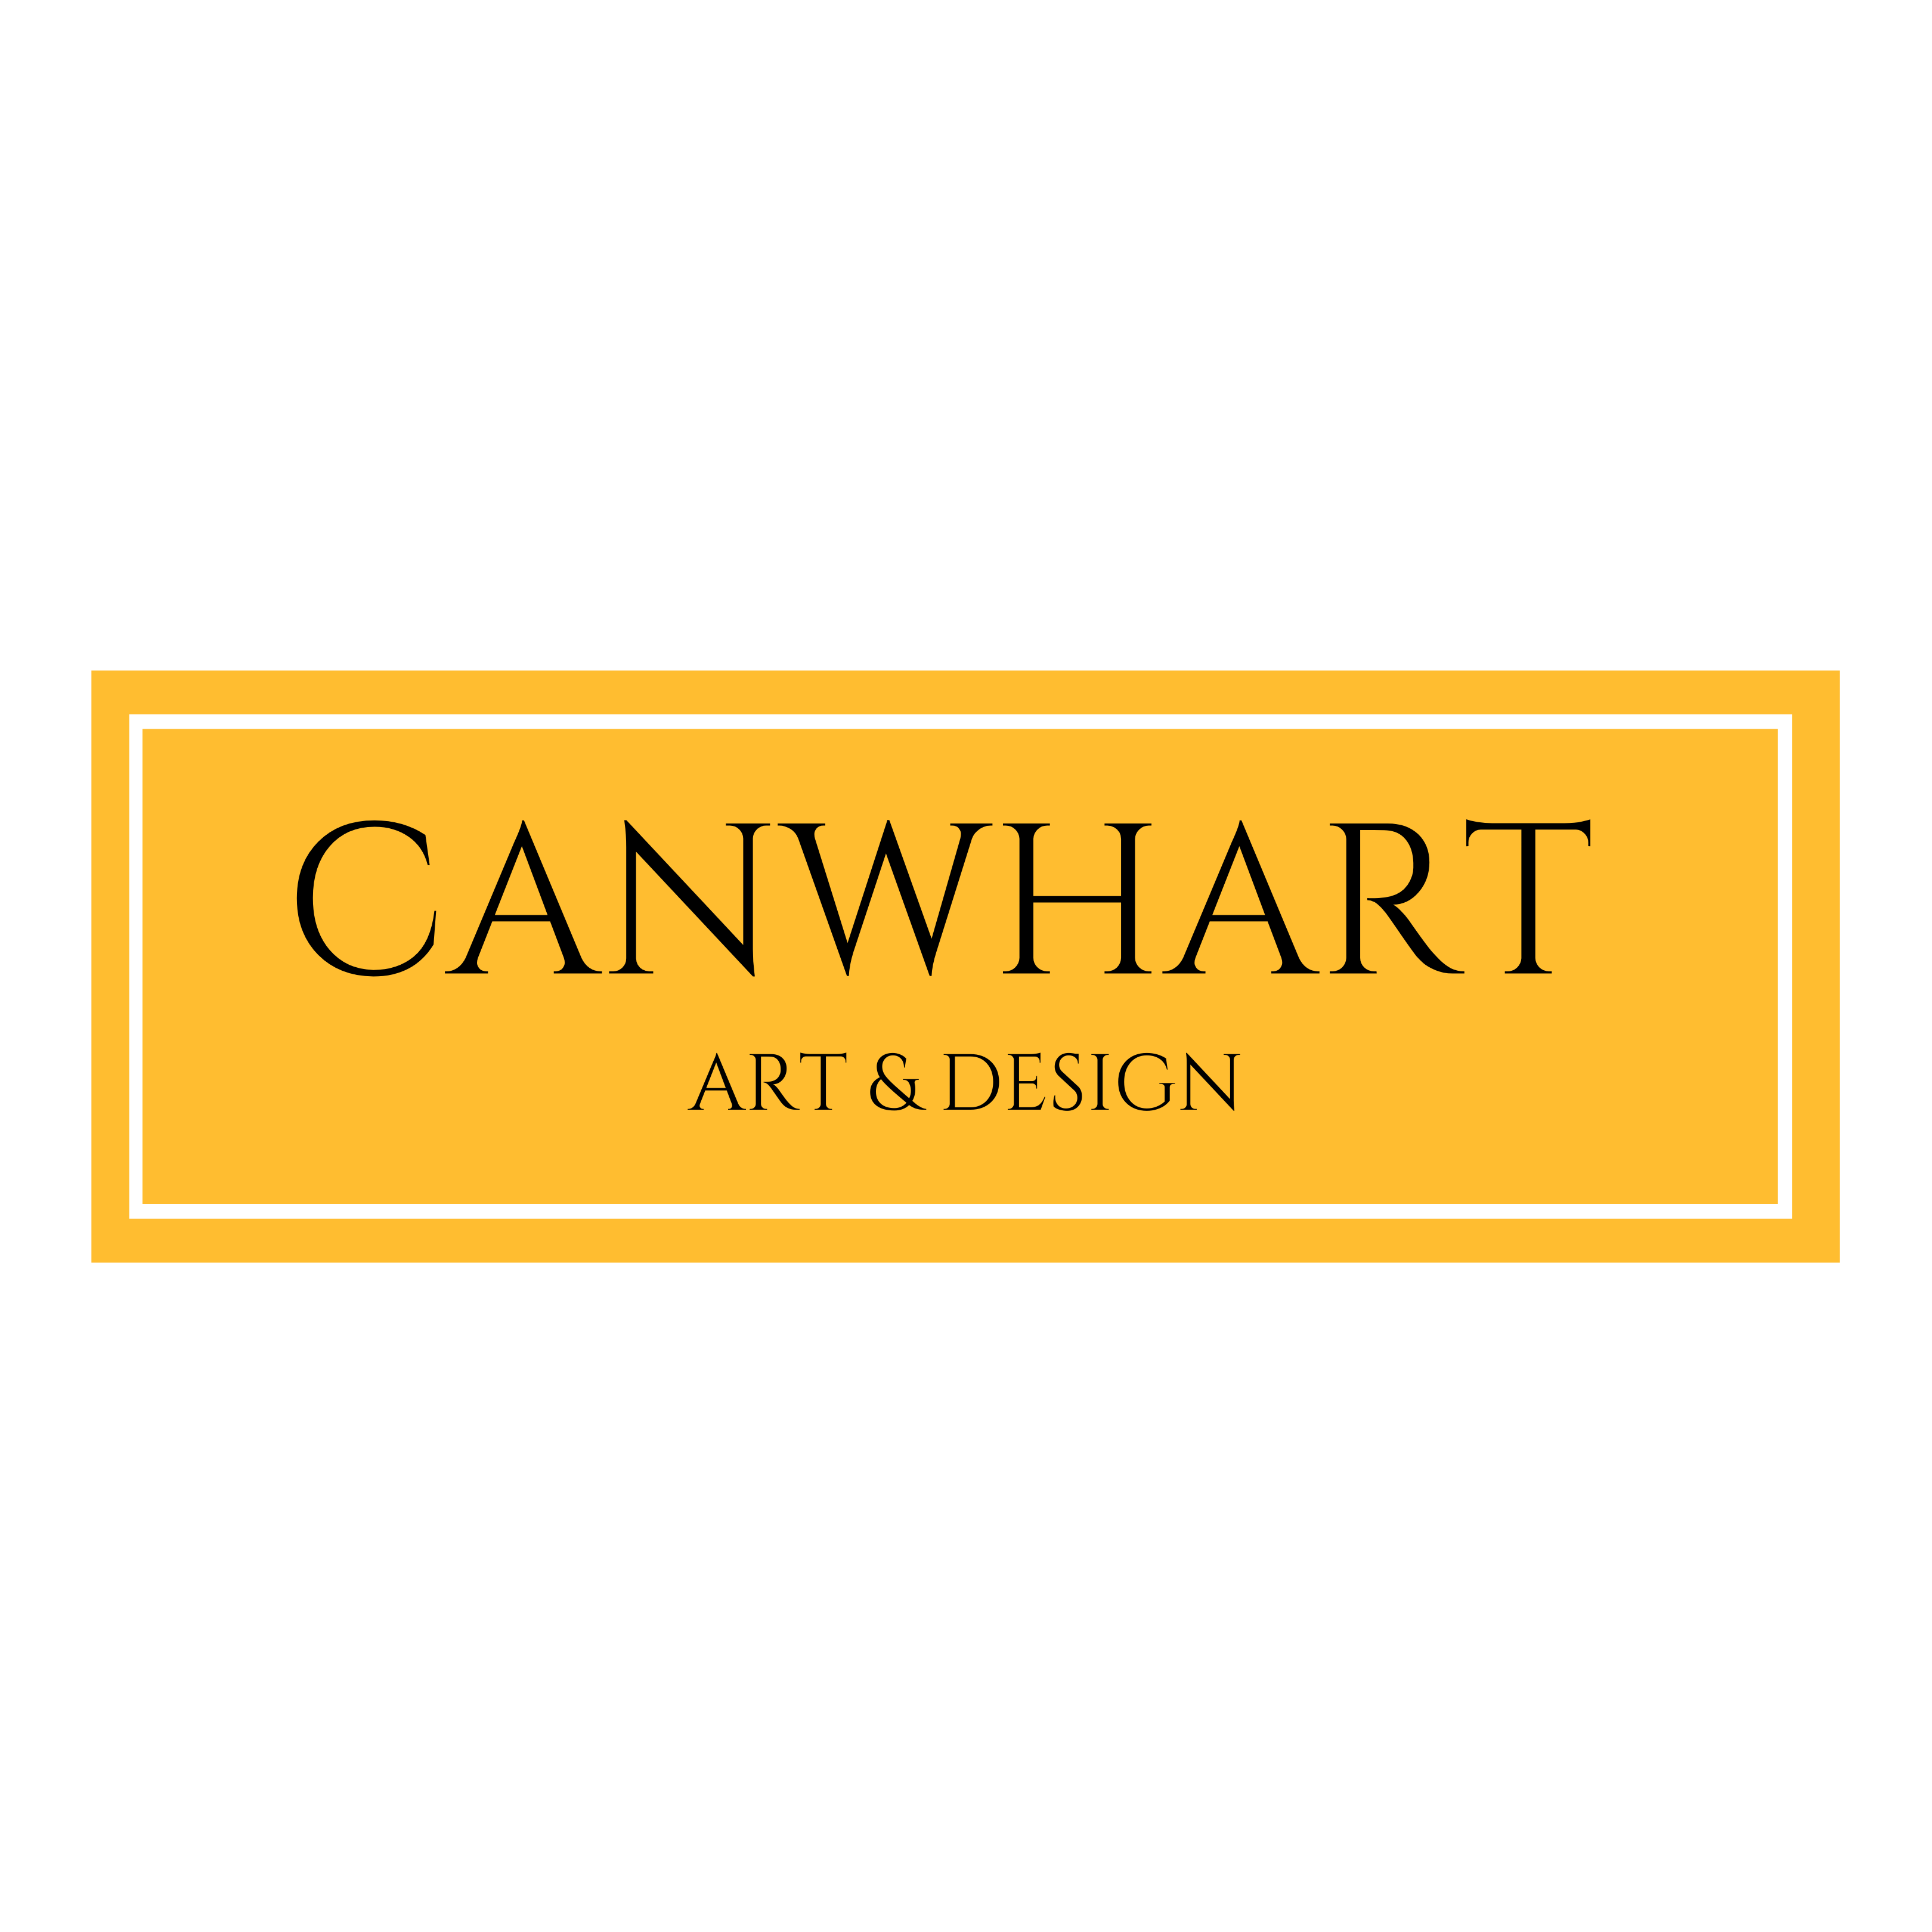 CANWHART